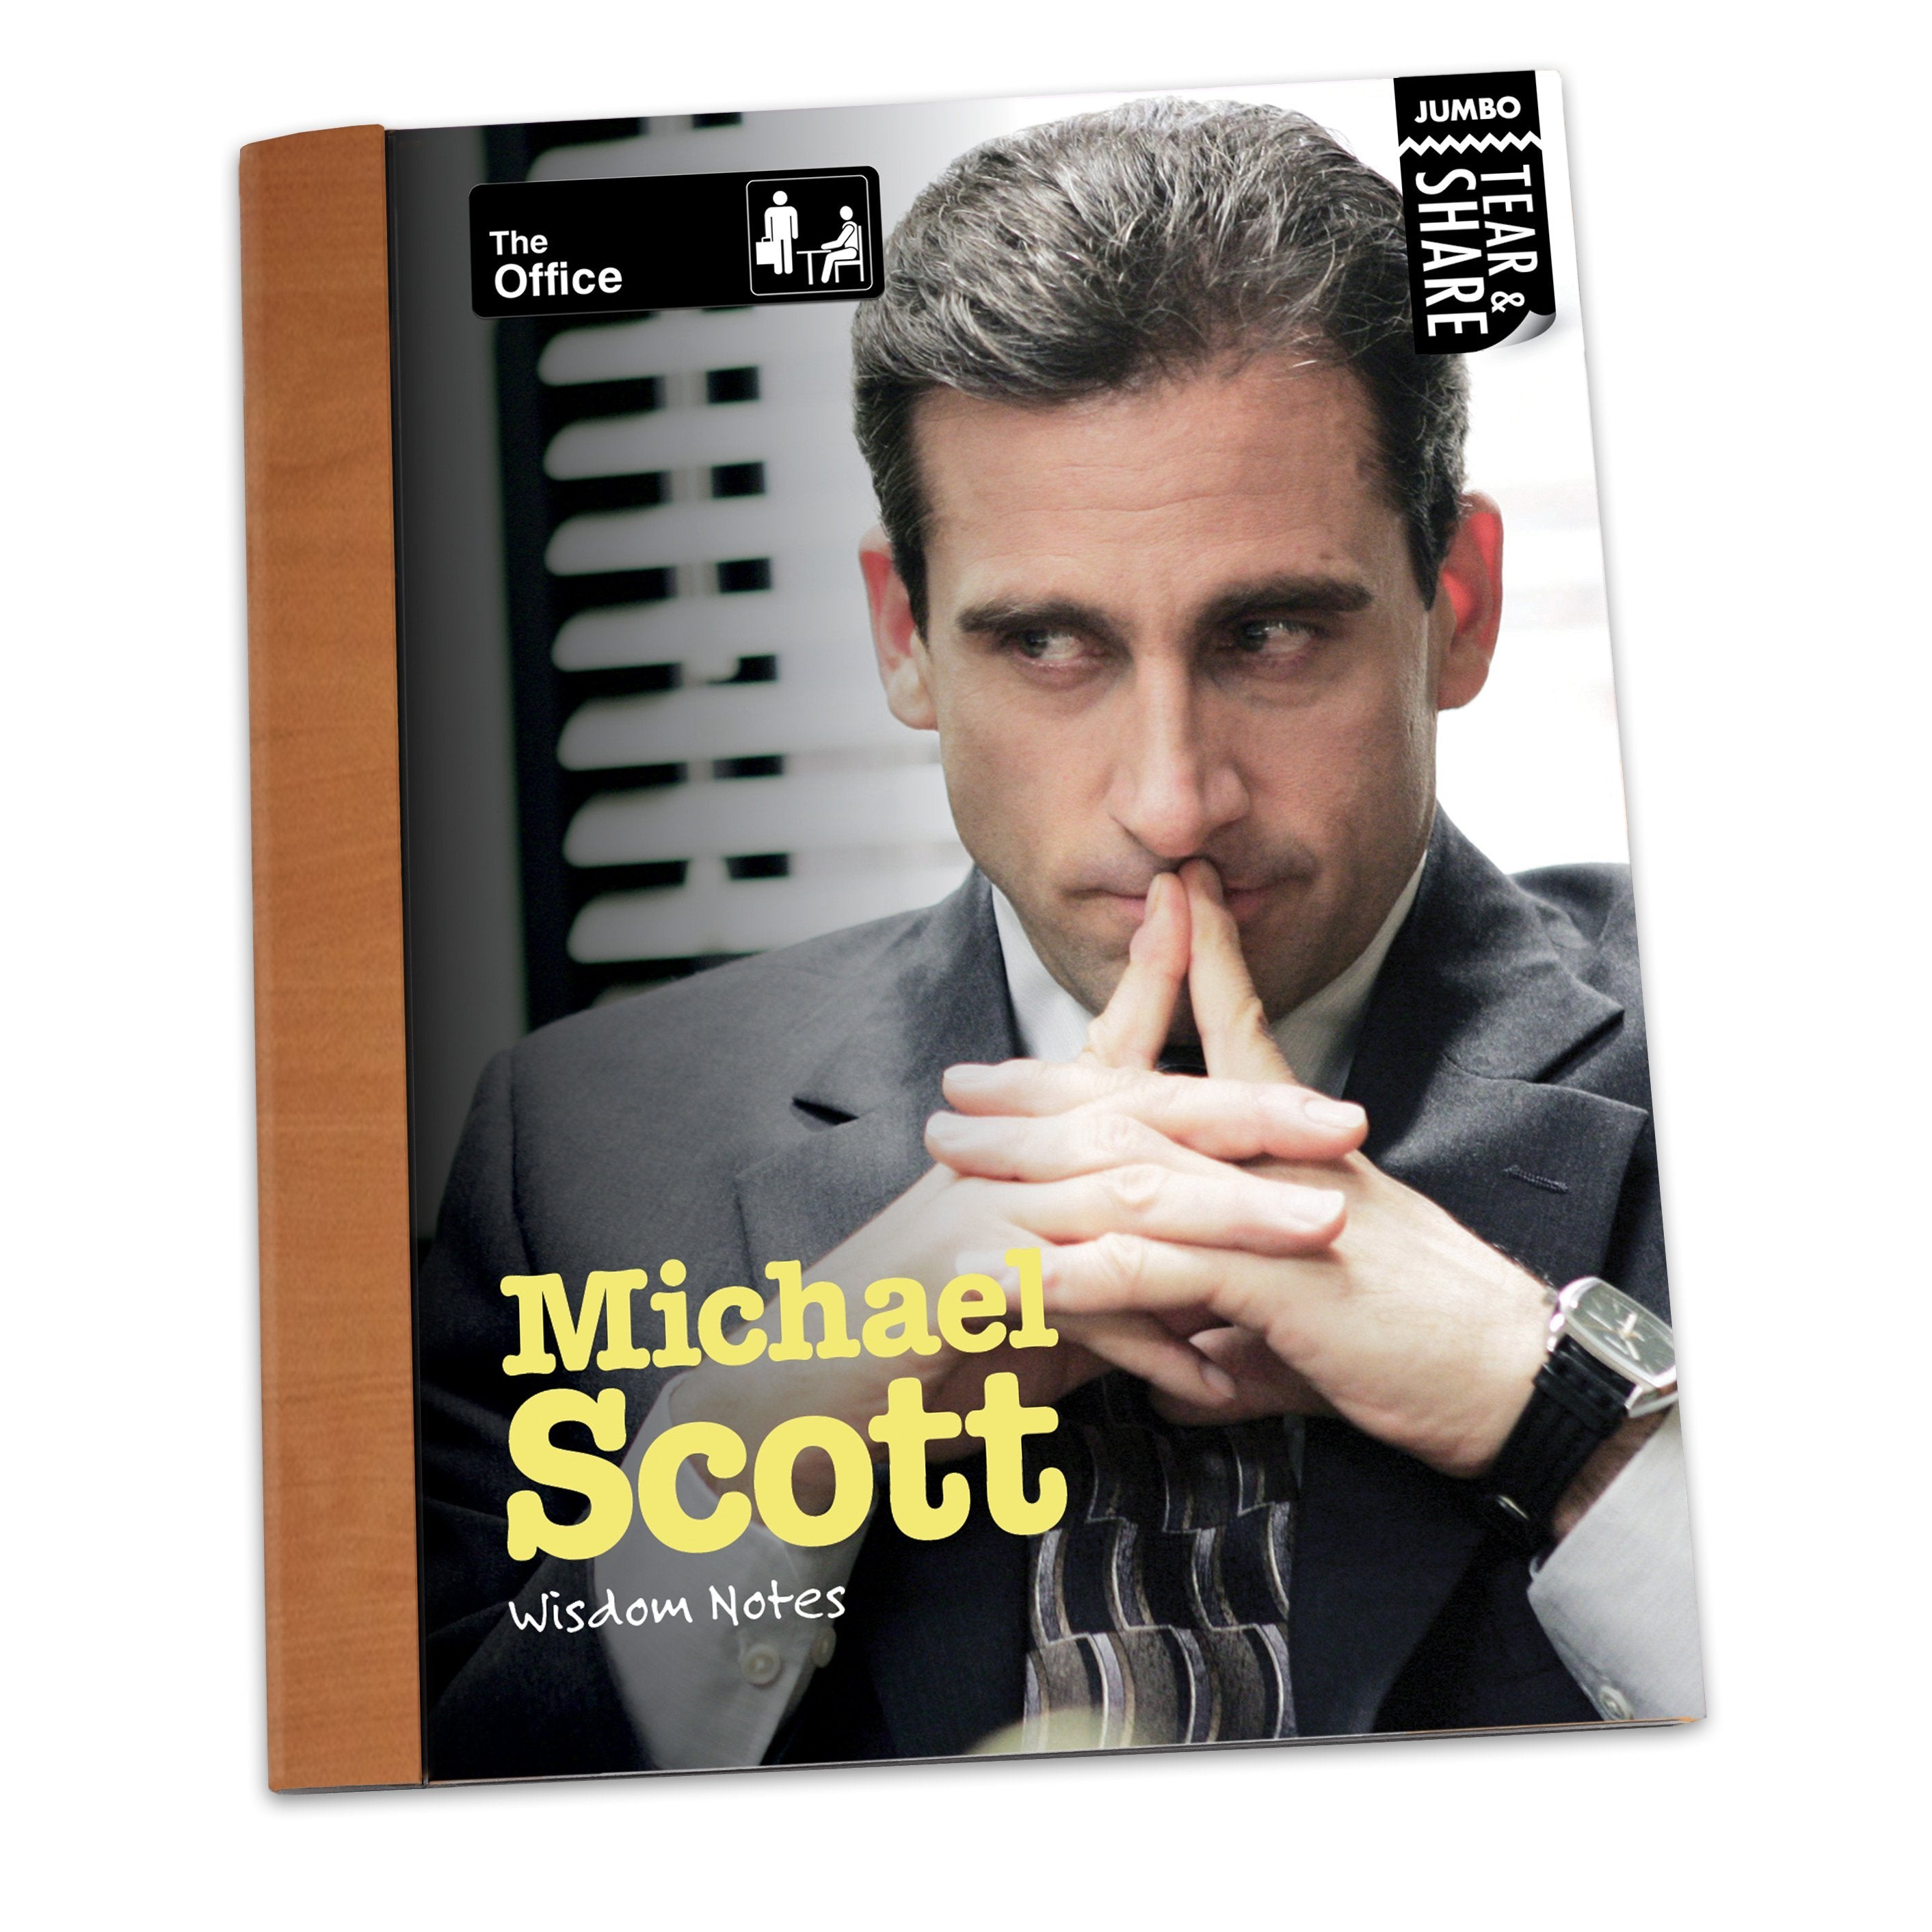 Michael Scott Jumbo Wisdom Notes - Official The Office Merchandise